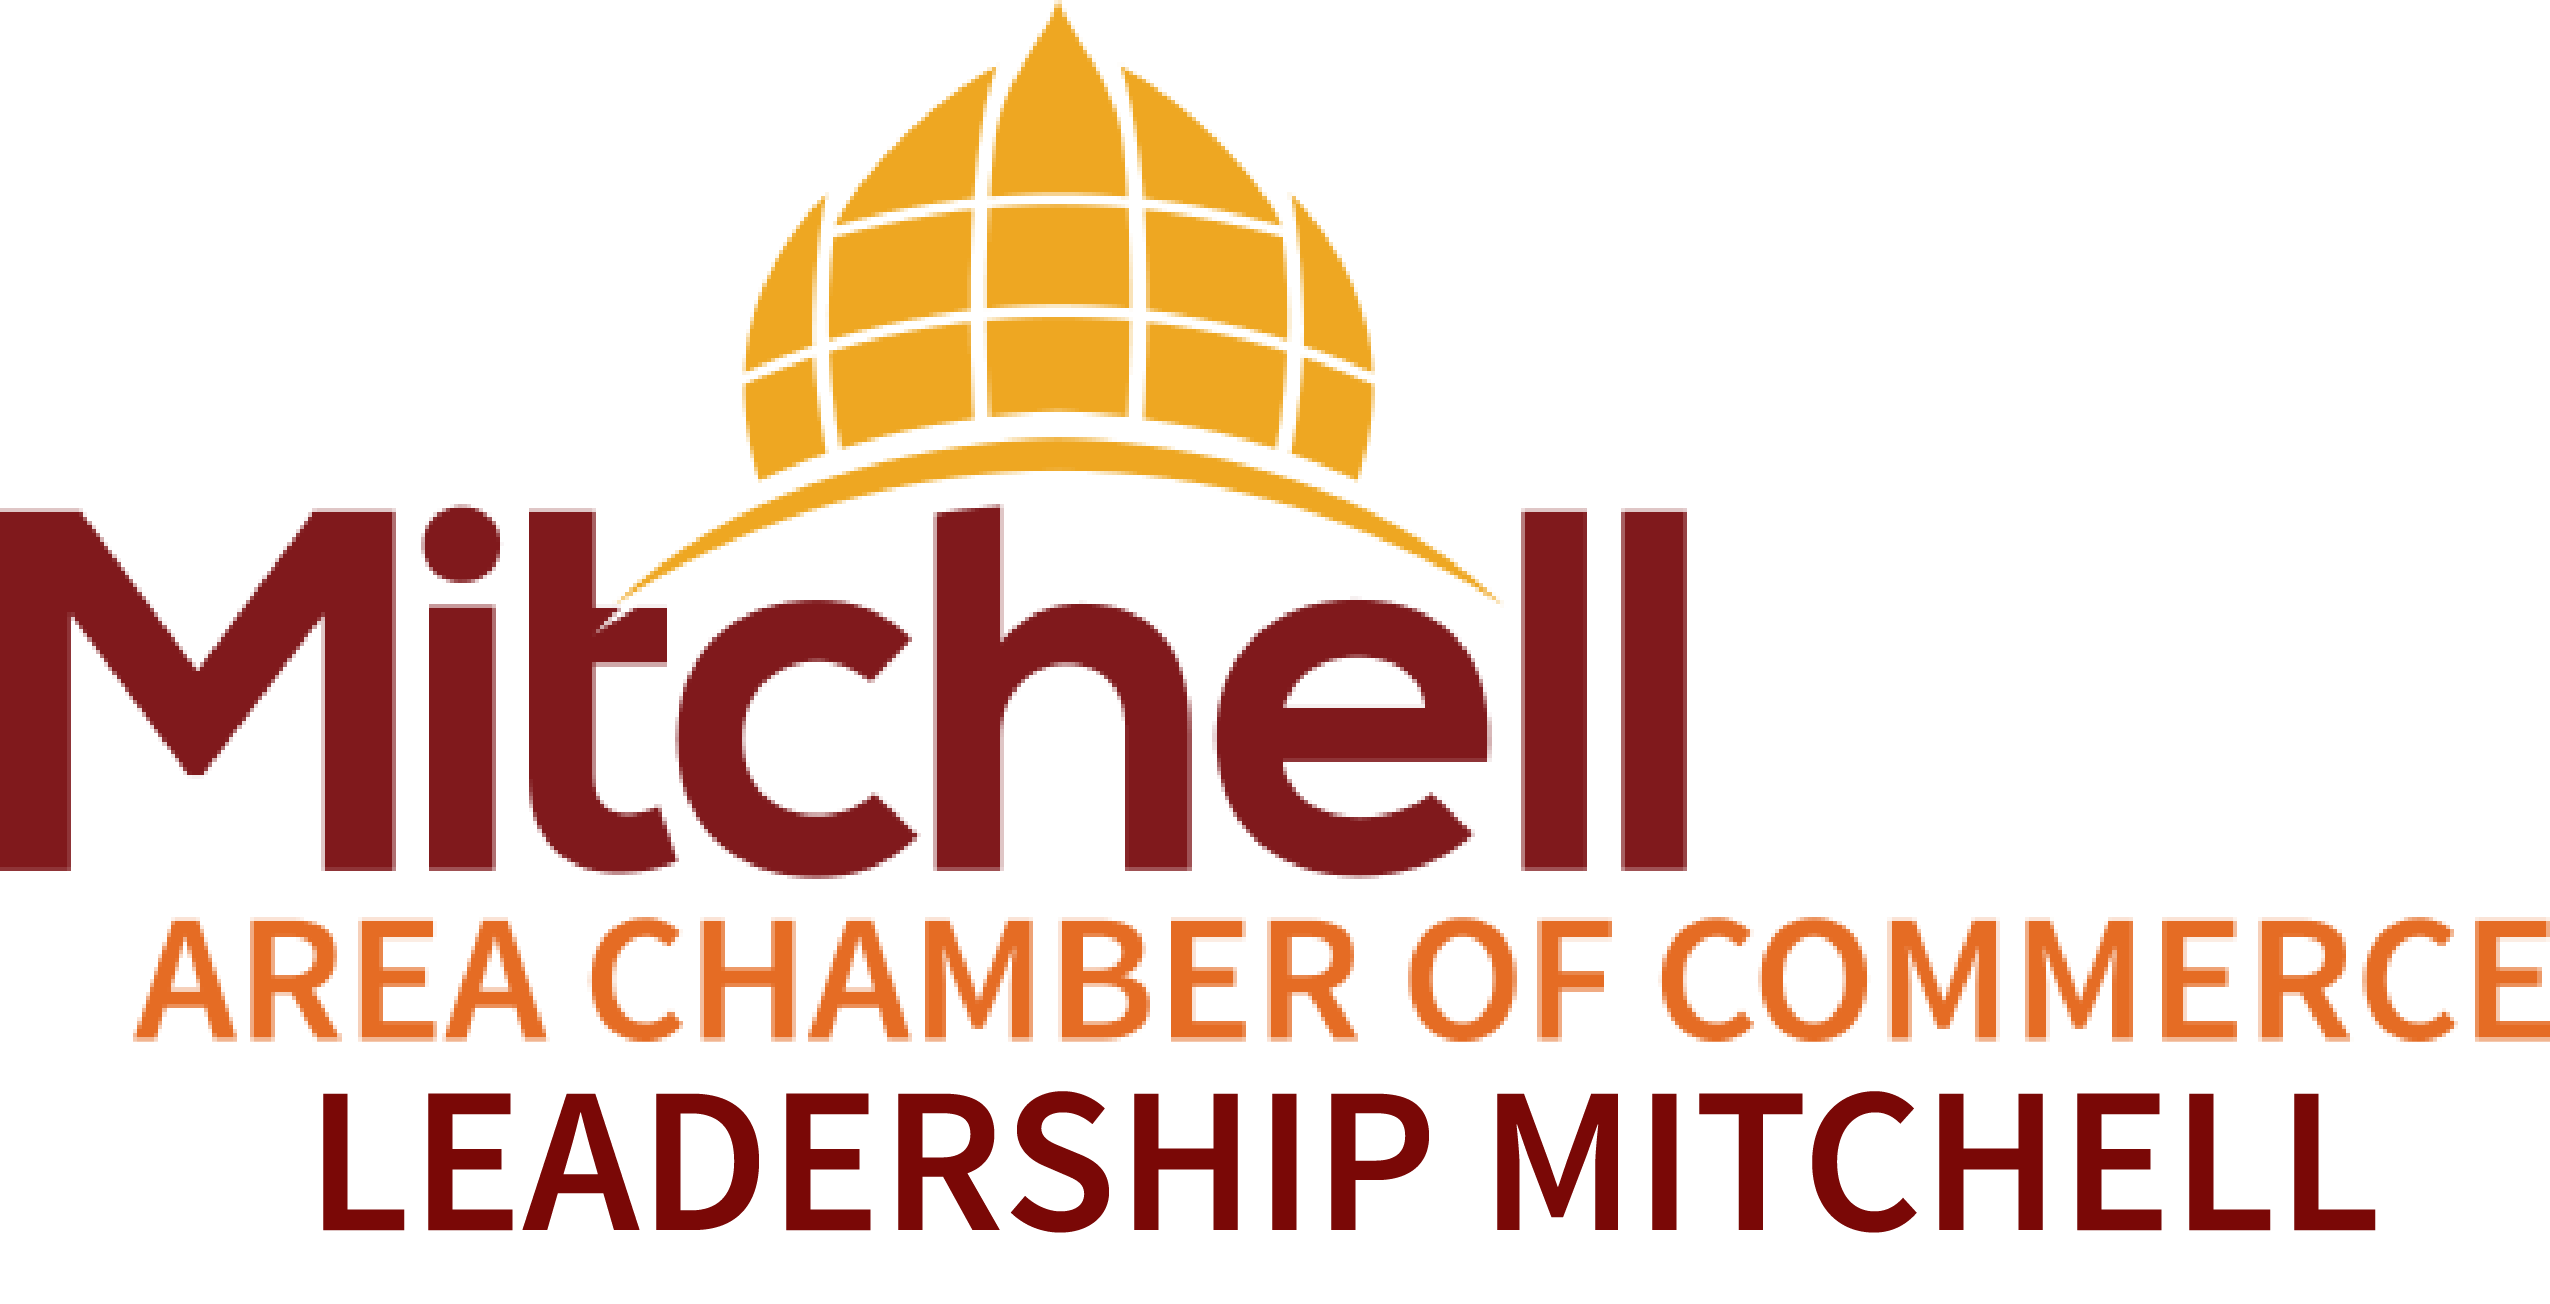 Leadership Mitchell